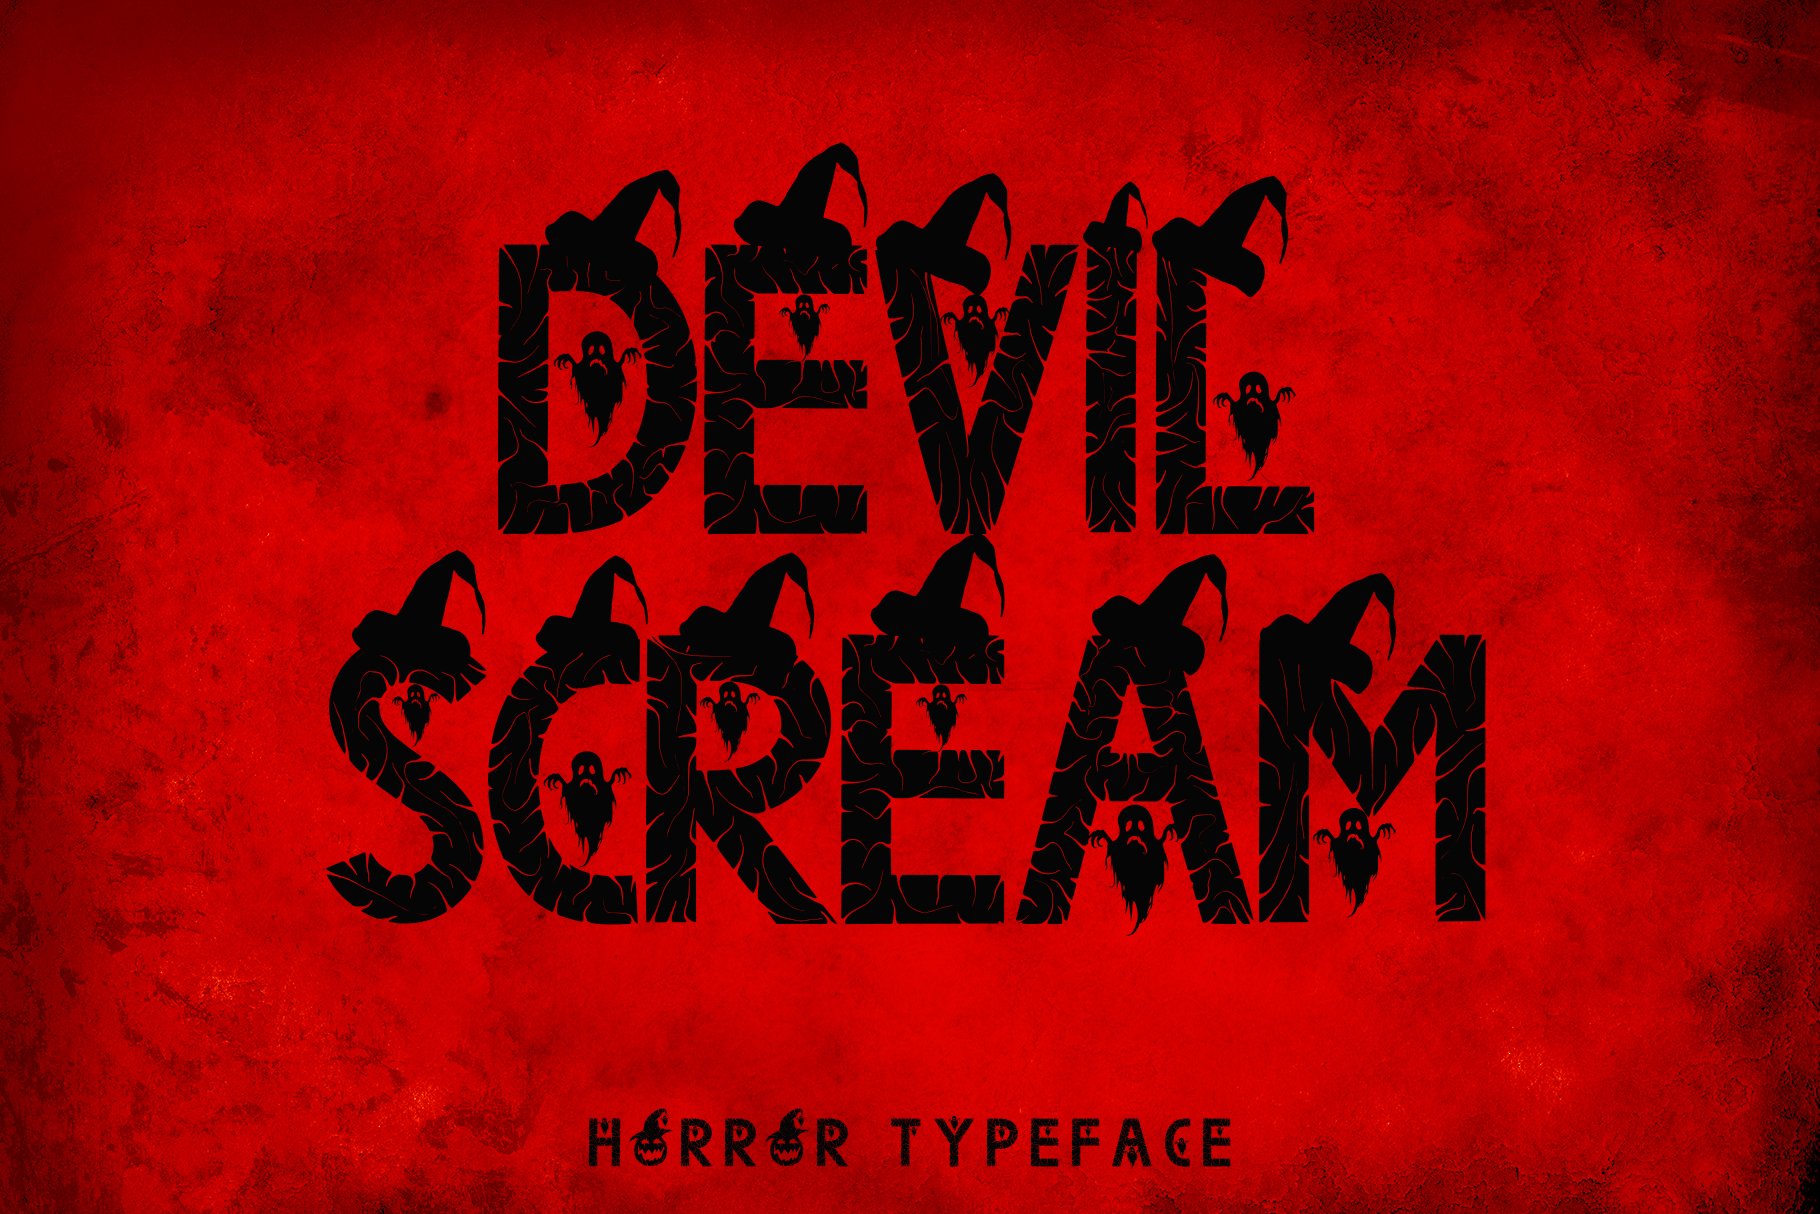 Devil Scream cover image.